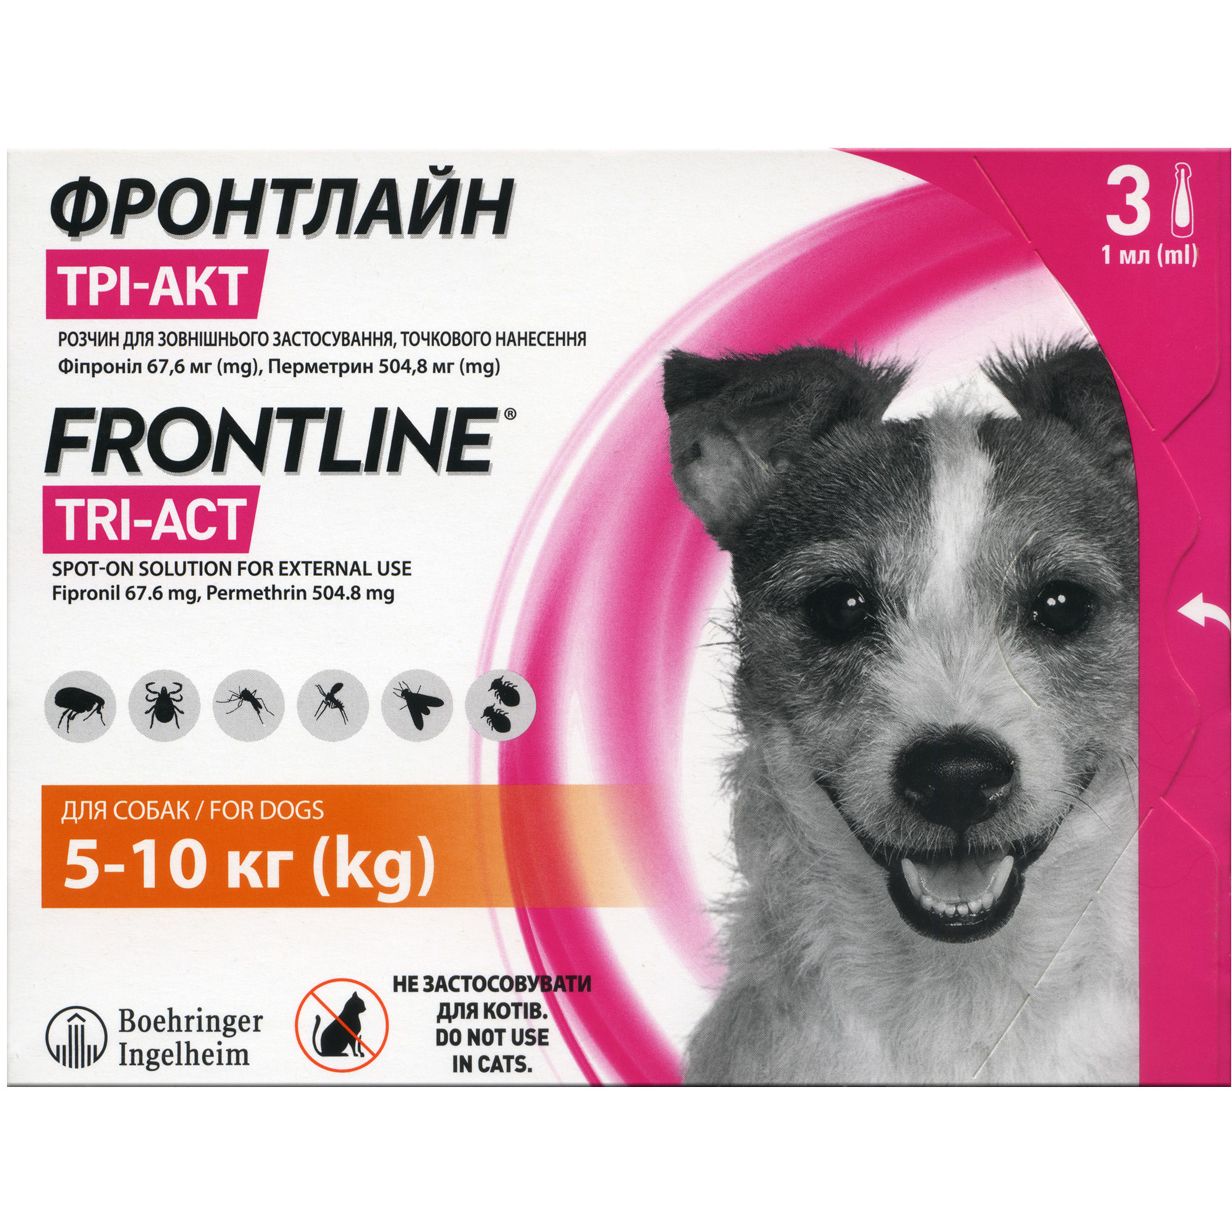 Капли Boehringer Ingelheim Frontline Tri-Act от блох и клещей для собак 5-10 кг 3 мл (3 шт. х 1 мл) (159912) - фото 1